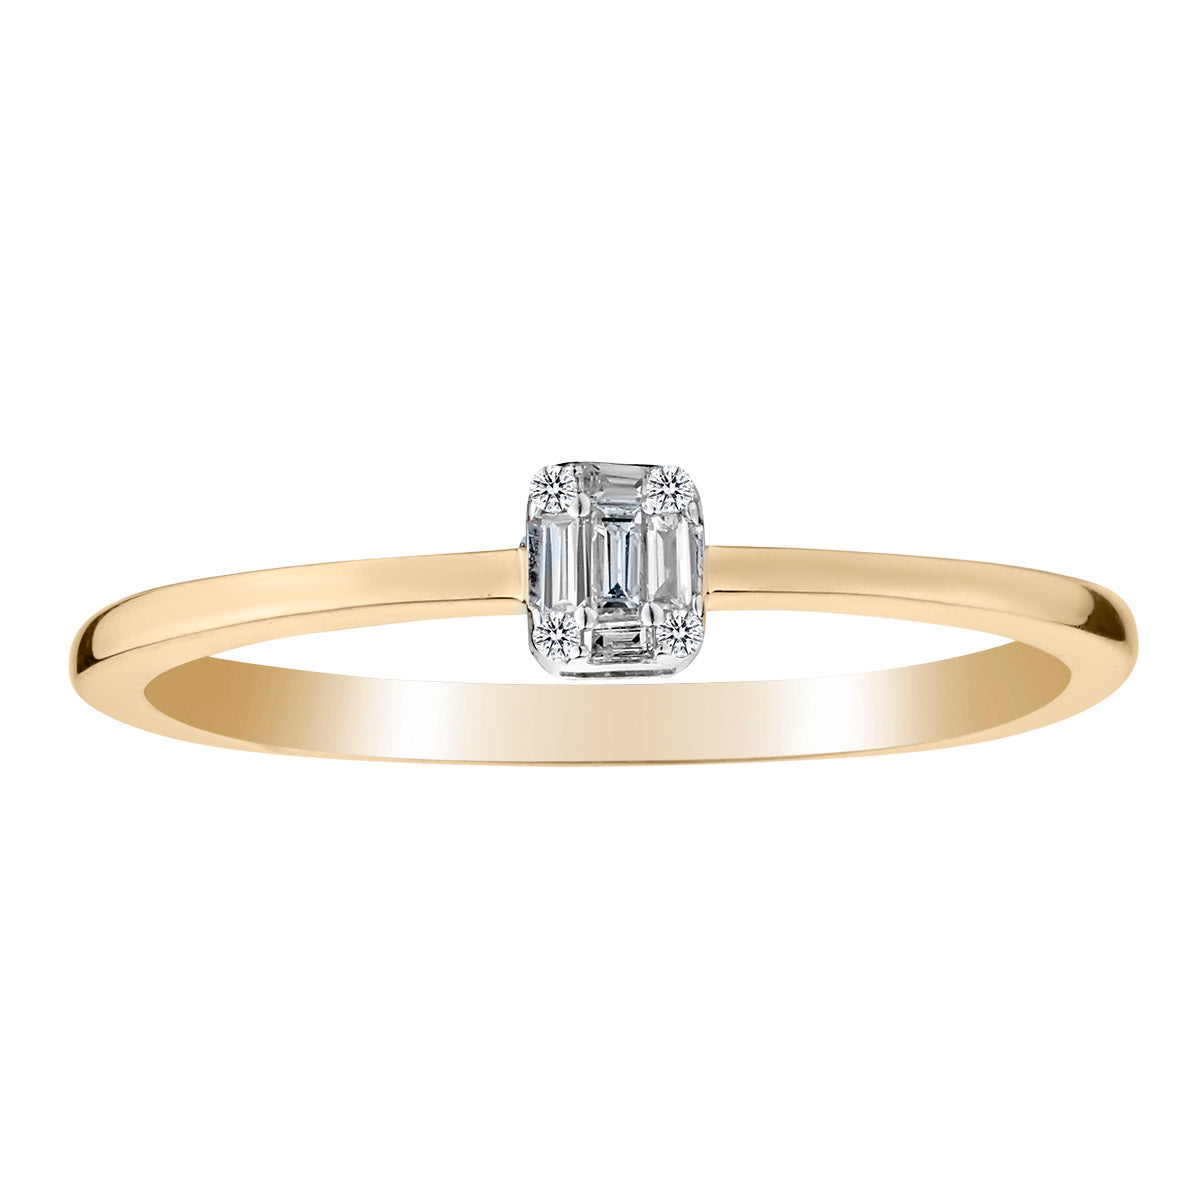 .06 Carat of Diamonds Emerald Shape Ring, 10kt Yellow Gold......................NOW